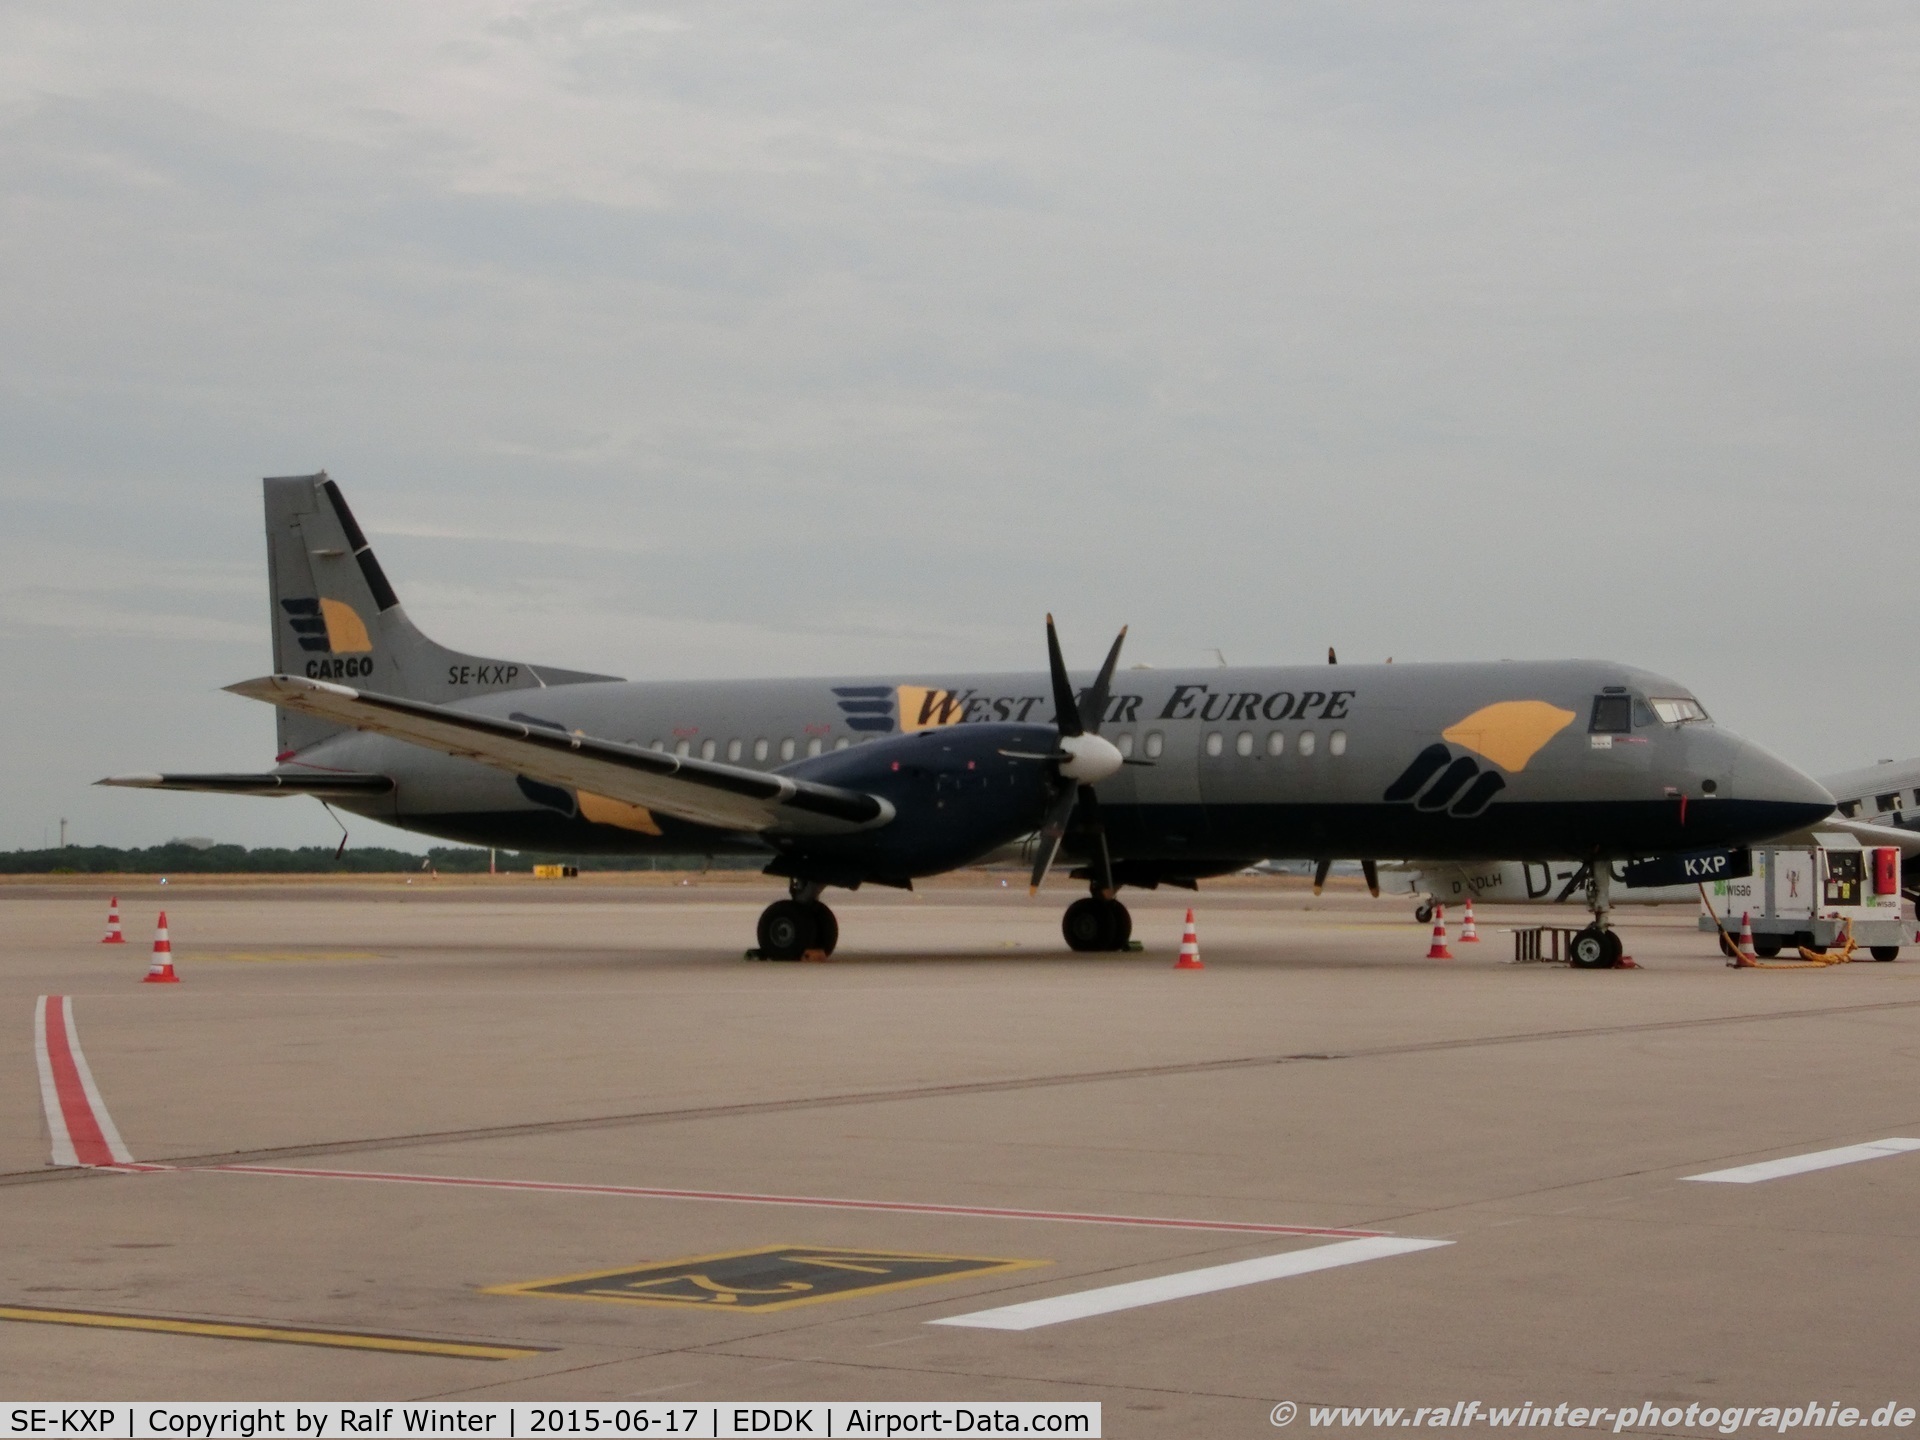 SE-KXP, 1992 British Aerospace ATP(F) C/N 2056, British Aerospace BAe ATP(F) - WLX West Air Europe - 2056 - SE-KXP - 17.06.2015 - CGN